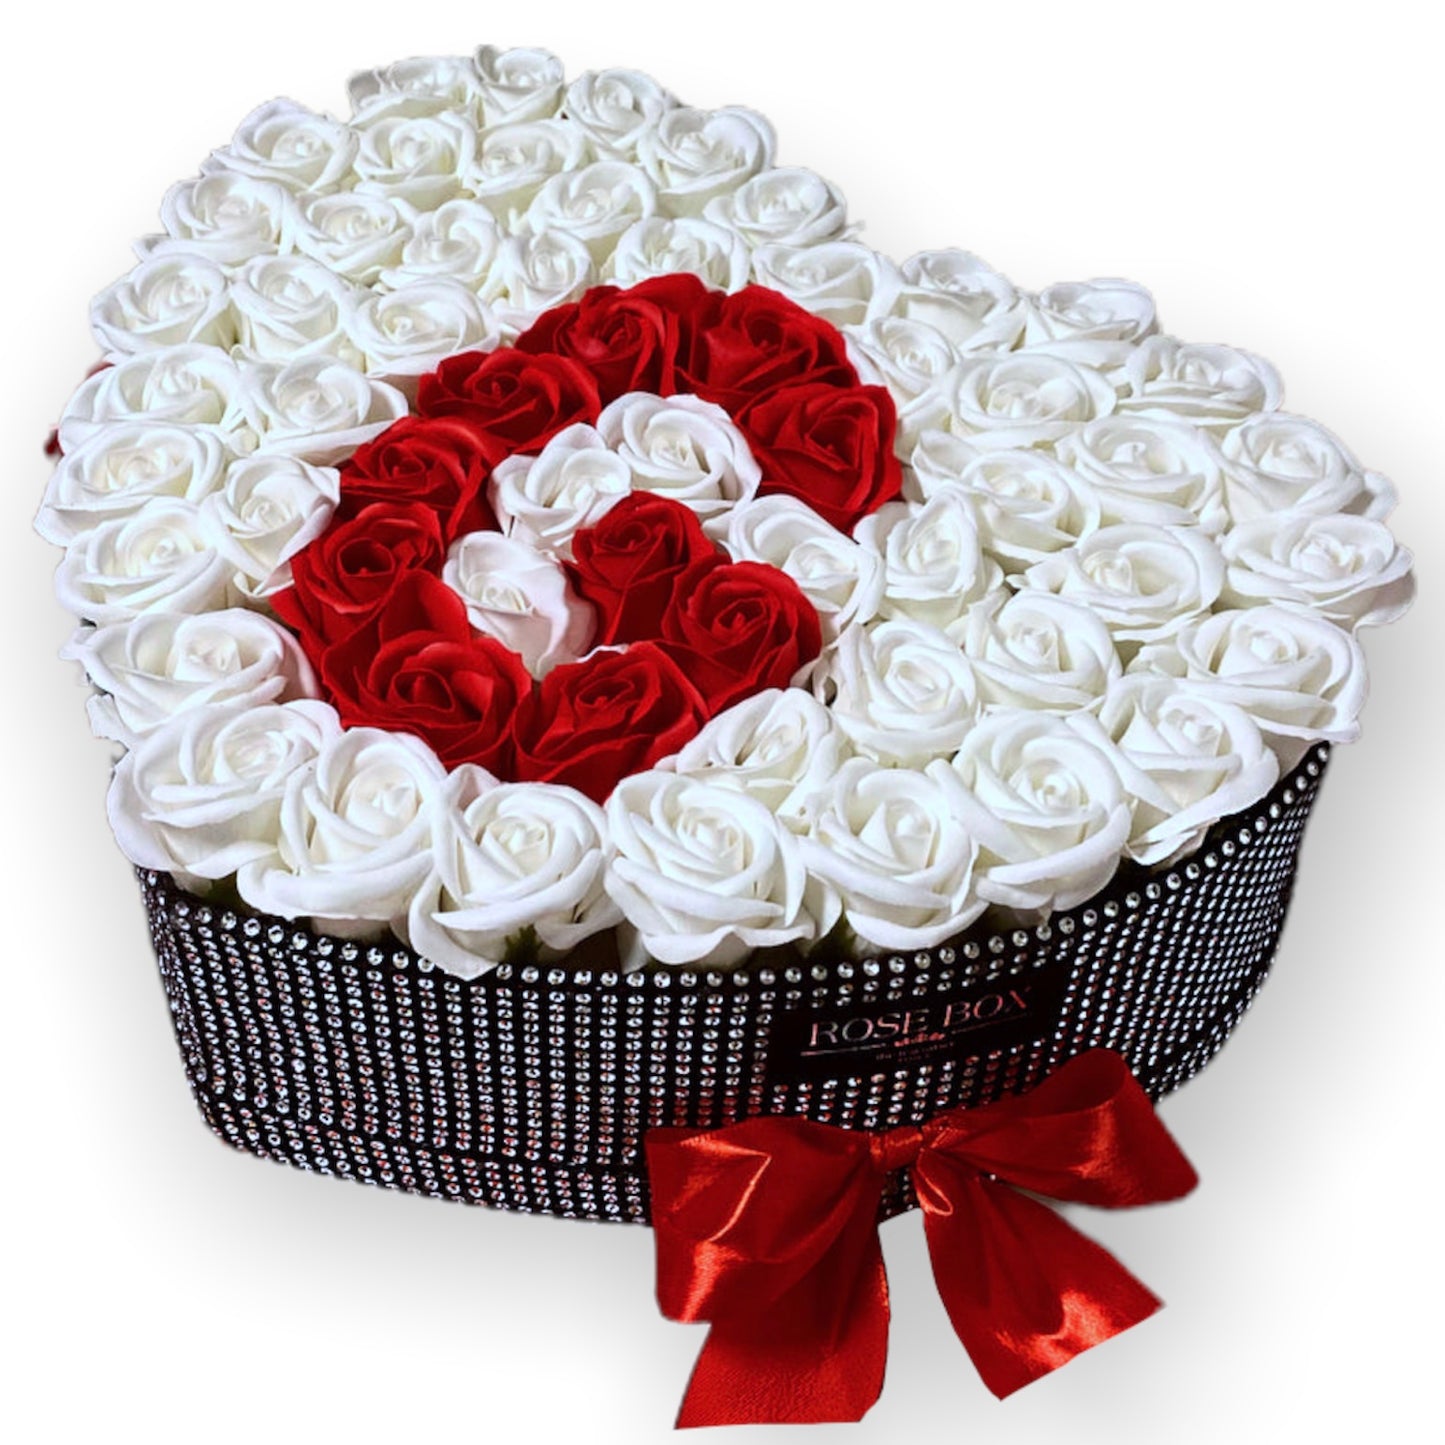 Cutie inima neagră cu cristale cu 61 trandafiri rosu&alb personalizata cu litera/număr